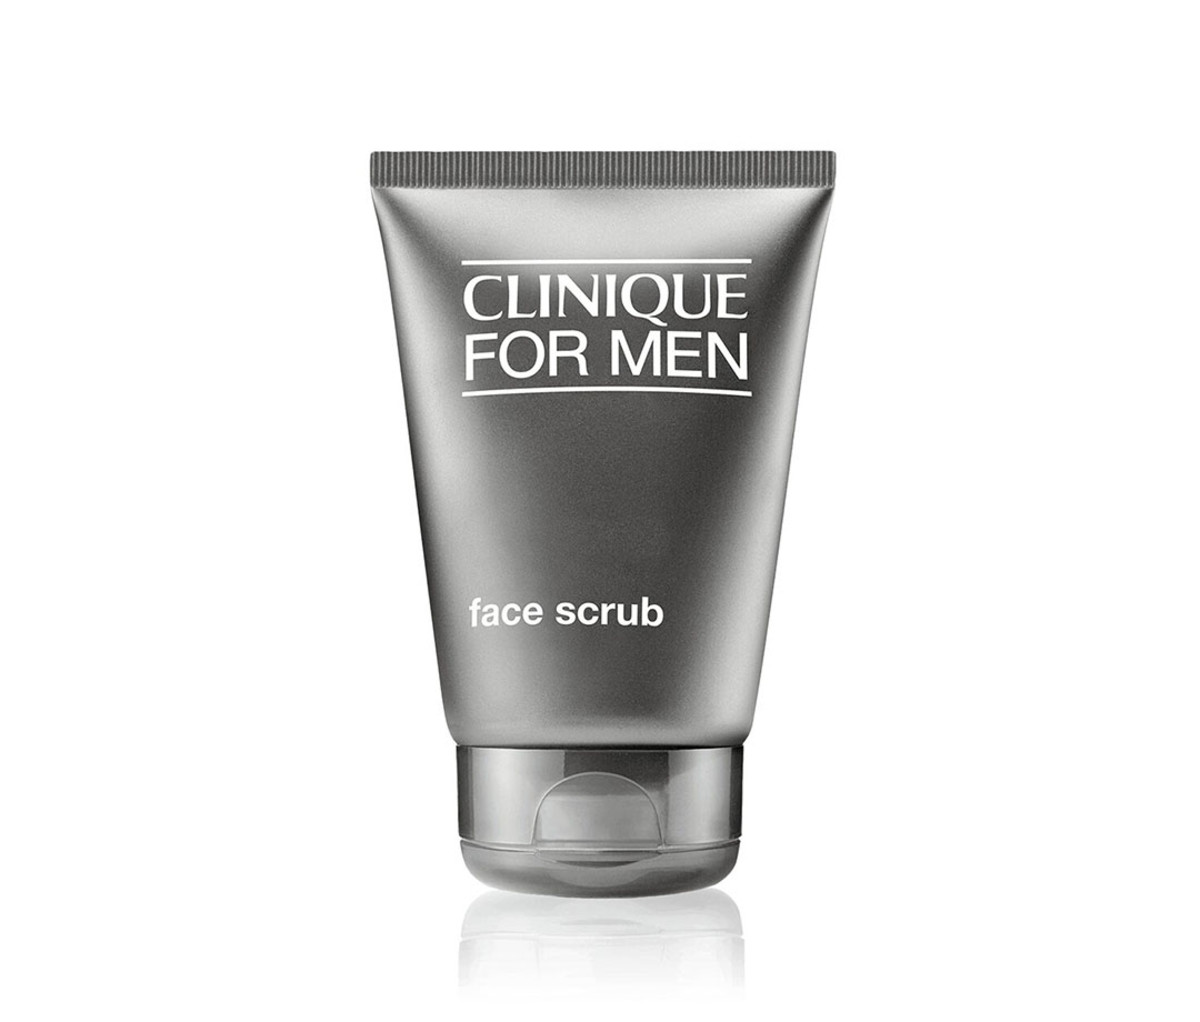 Clinique for Men face scrub